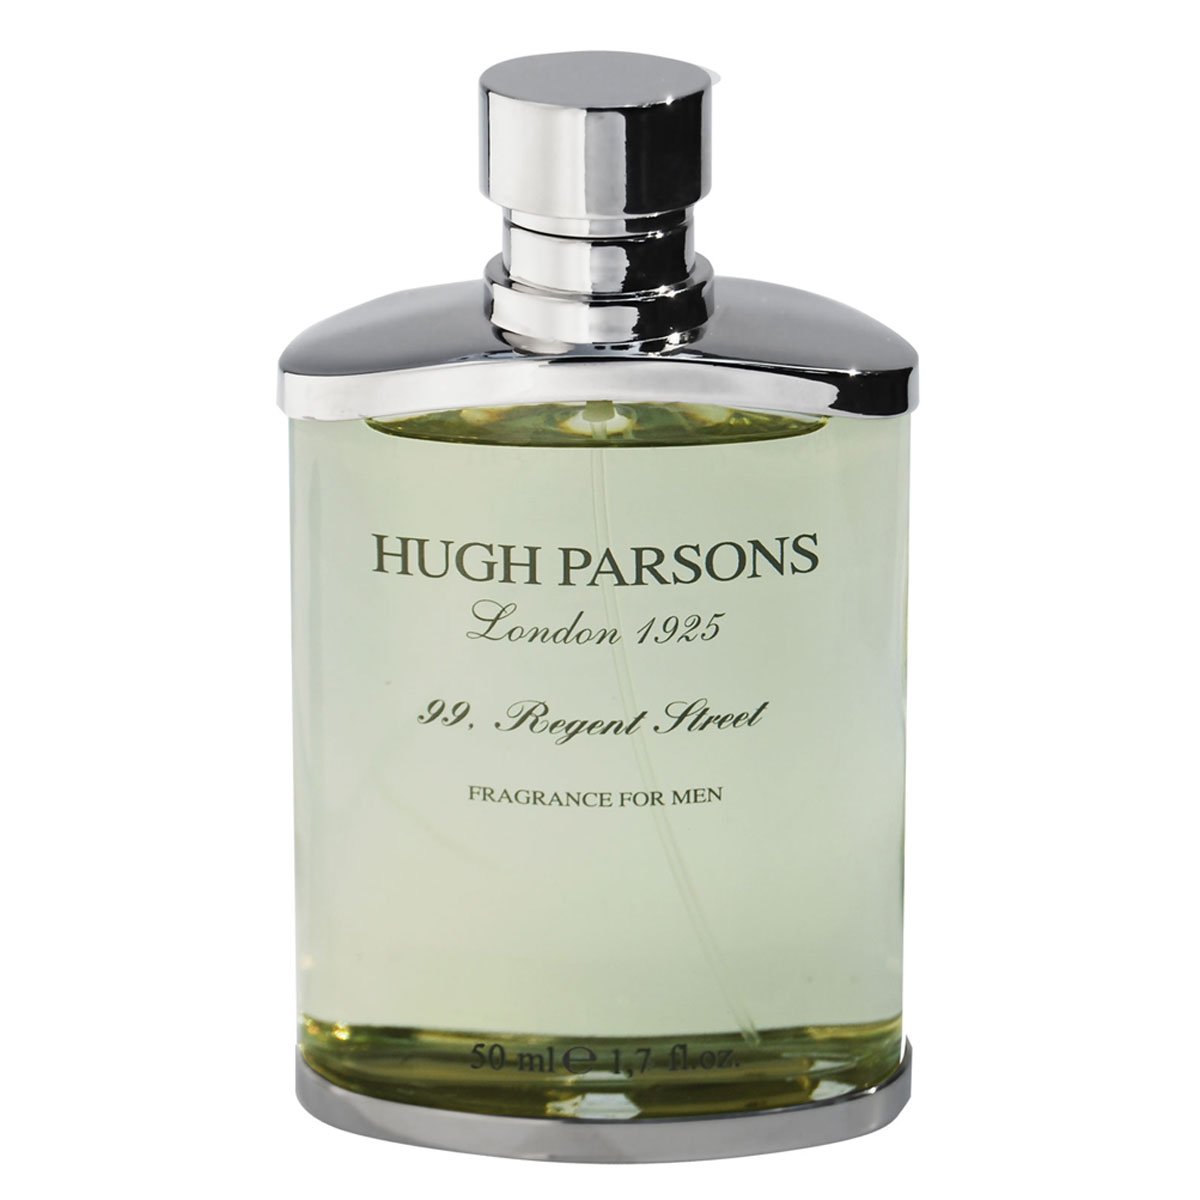 Hugh Parsons 99 Regent Street Eau de Parfum Natural Spray, 50 ml